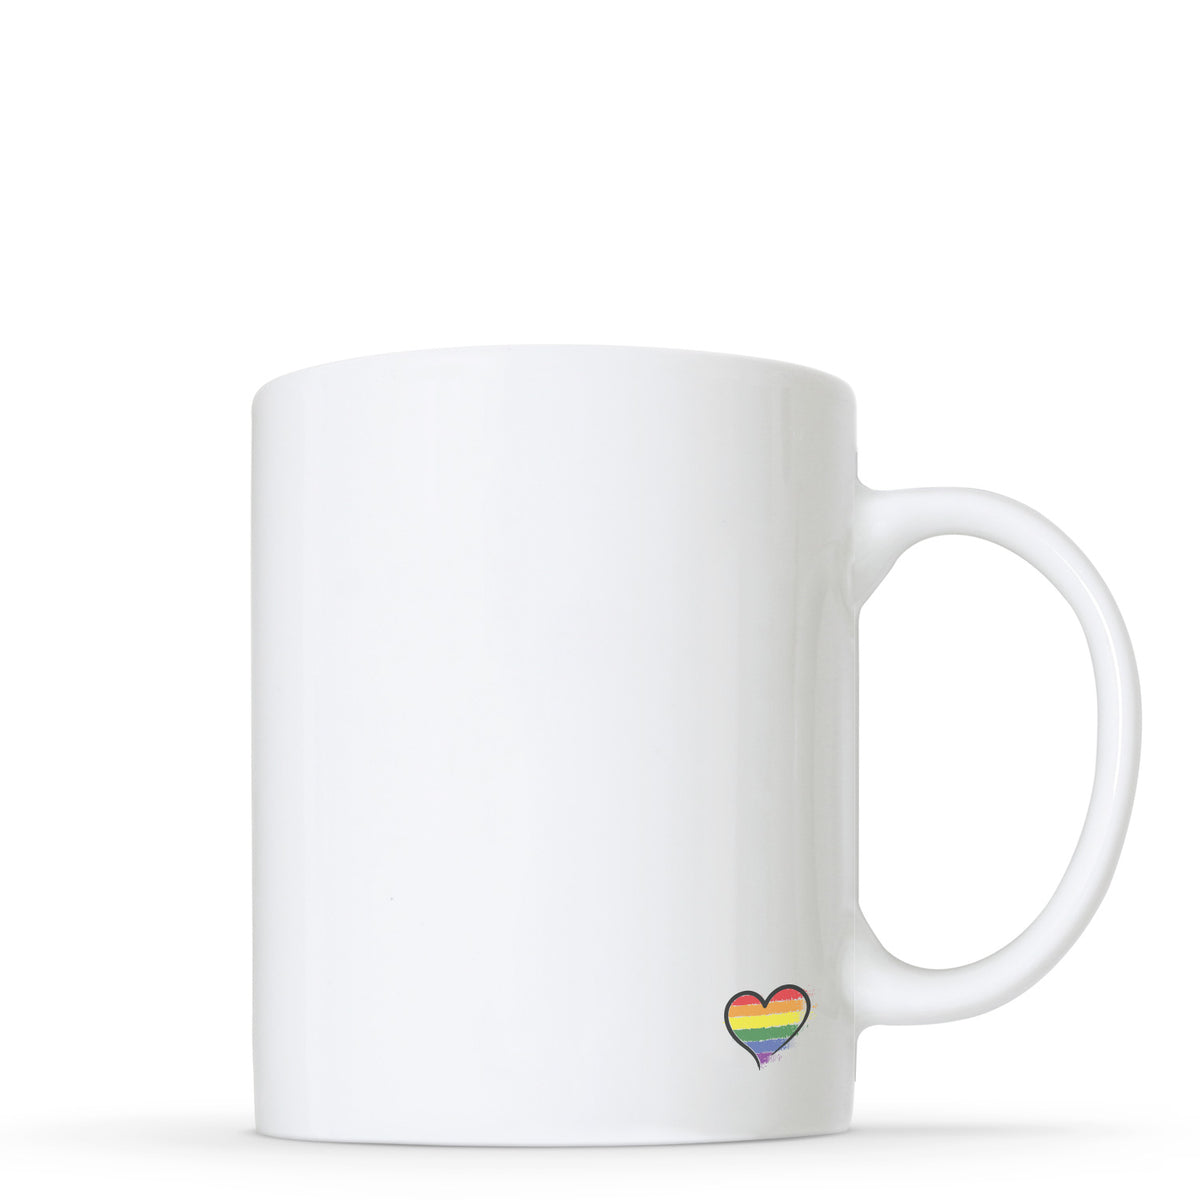 Stay You - Non-Binary Flag Shape Mug | Gift